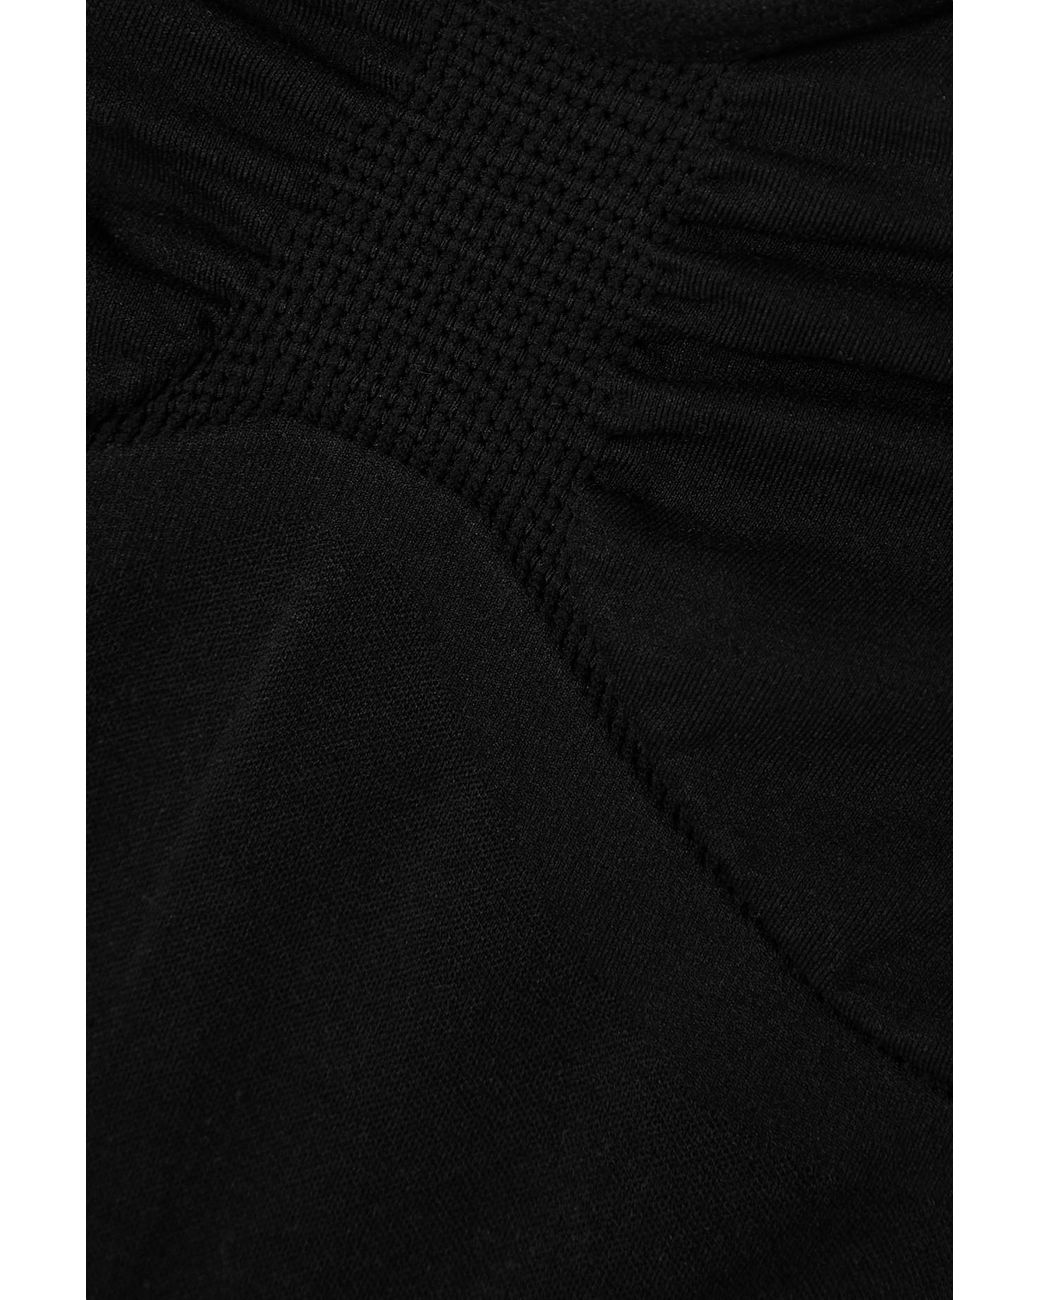 Skims Seamless Sculpt Low Back Bodysuit in Black